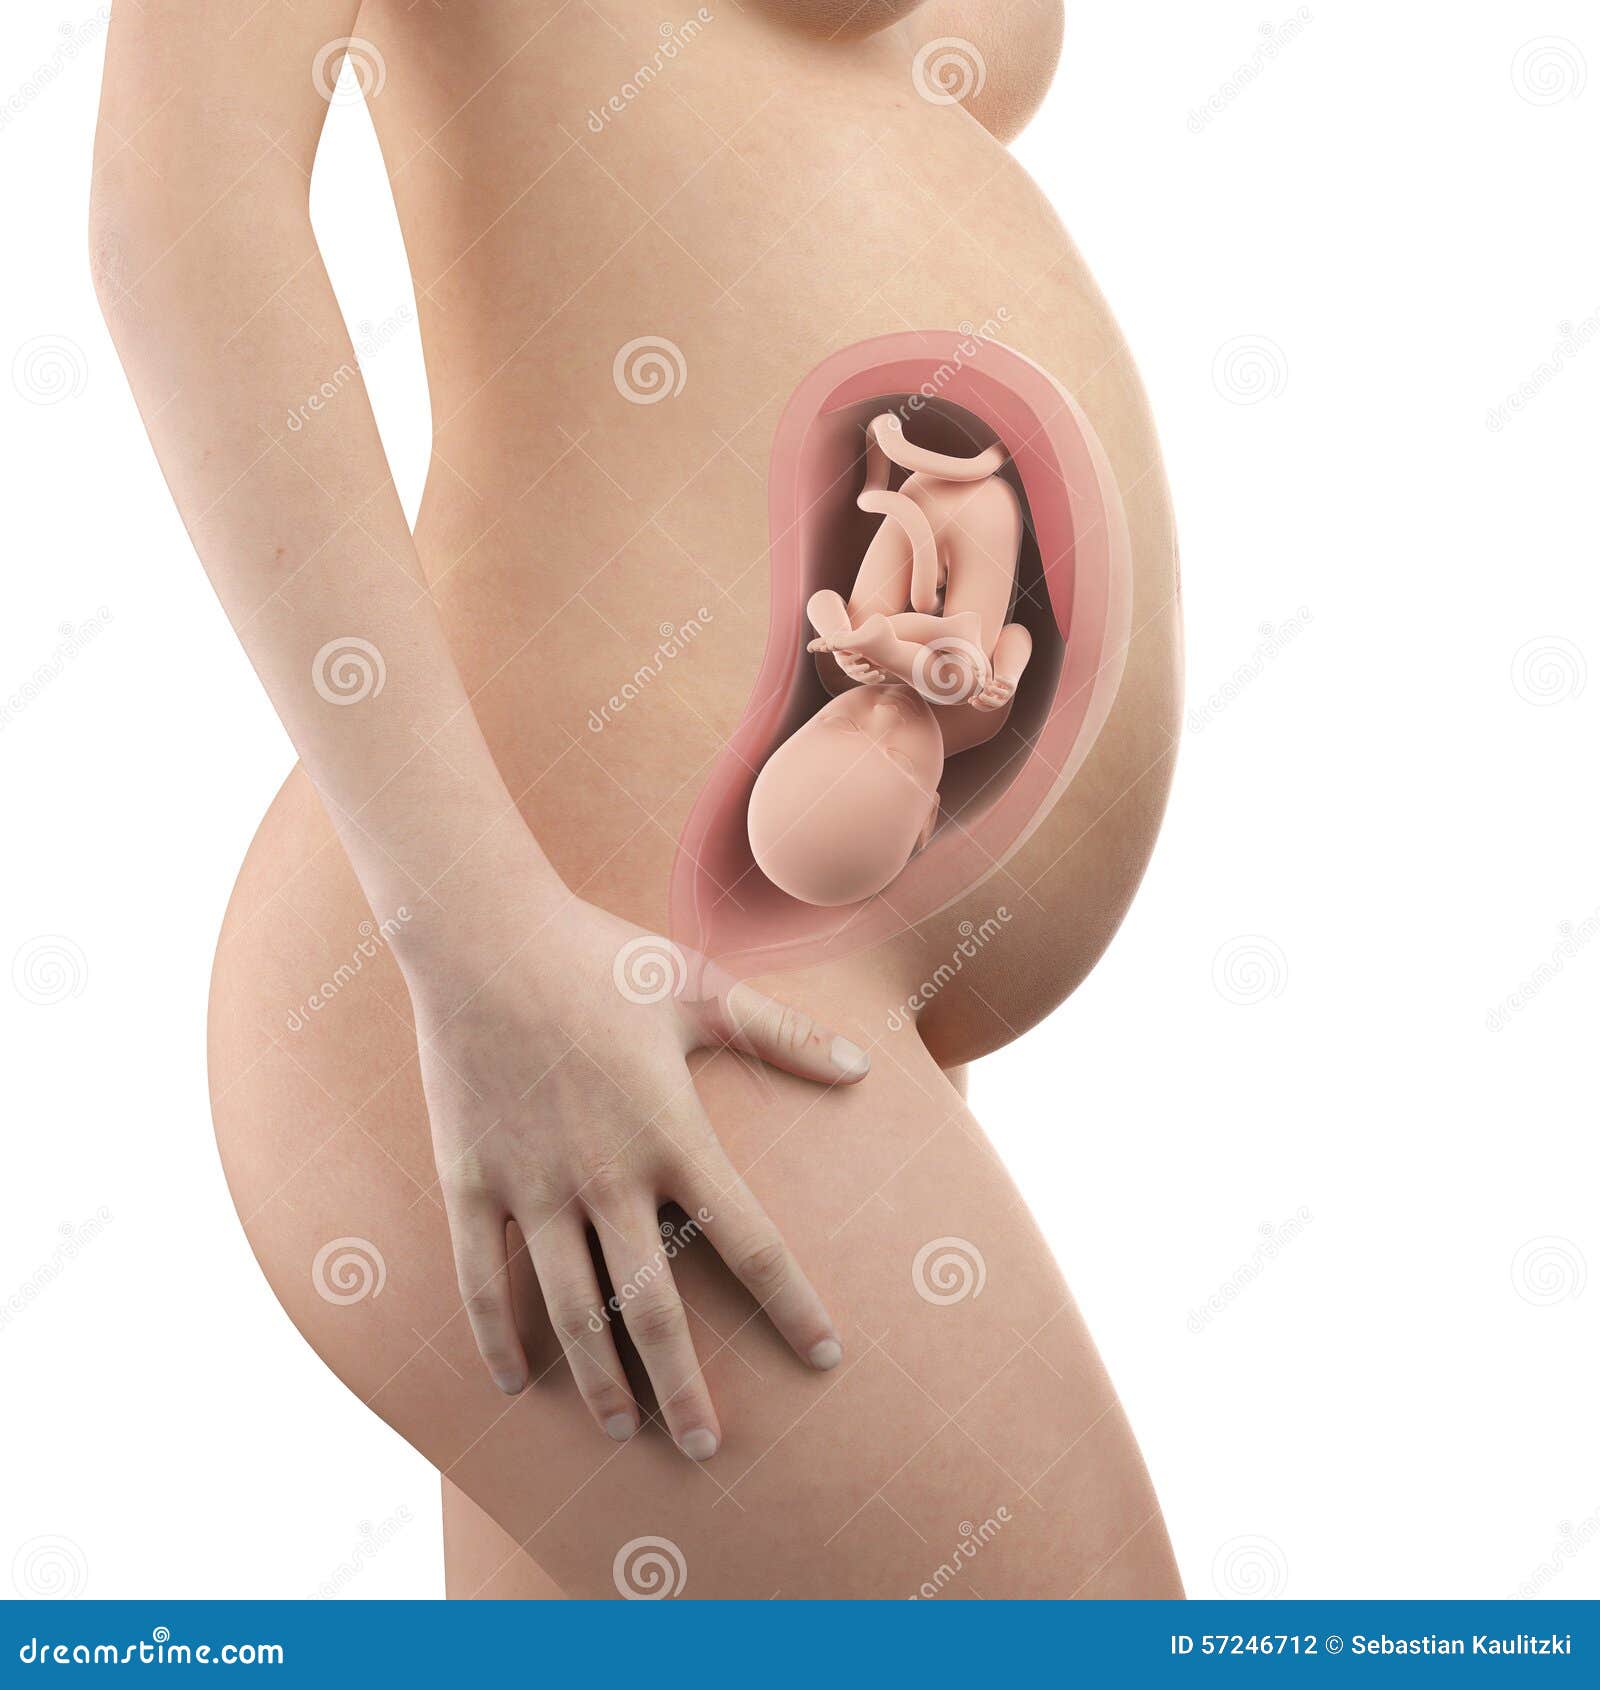 visible uterus and fetus week 32